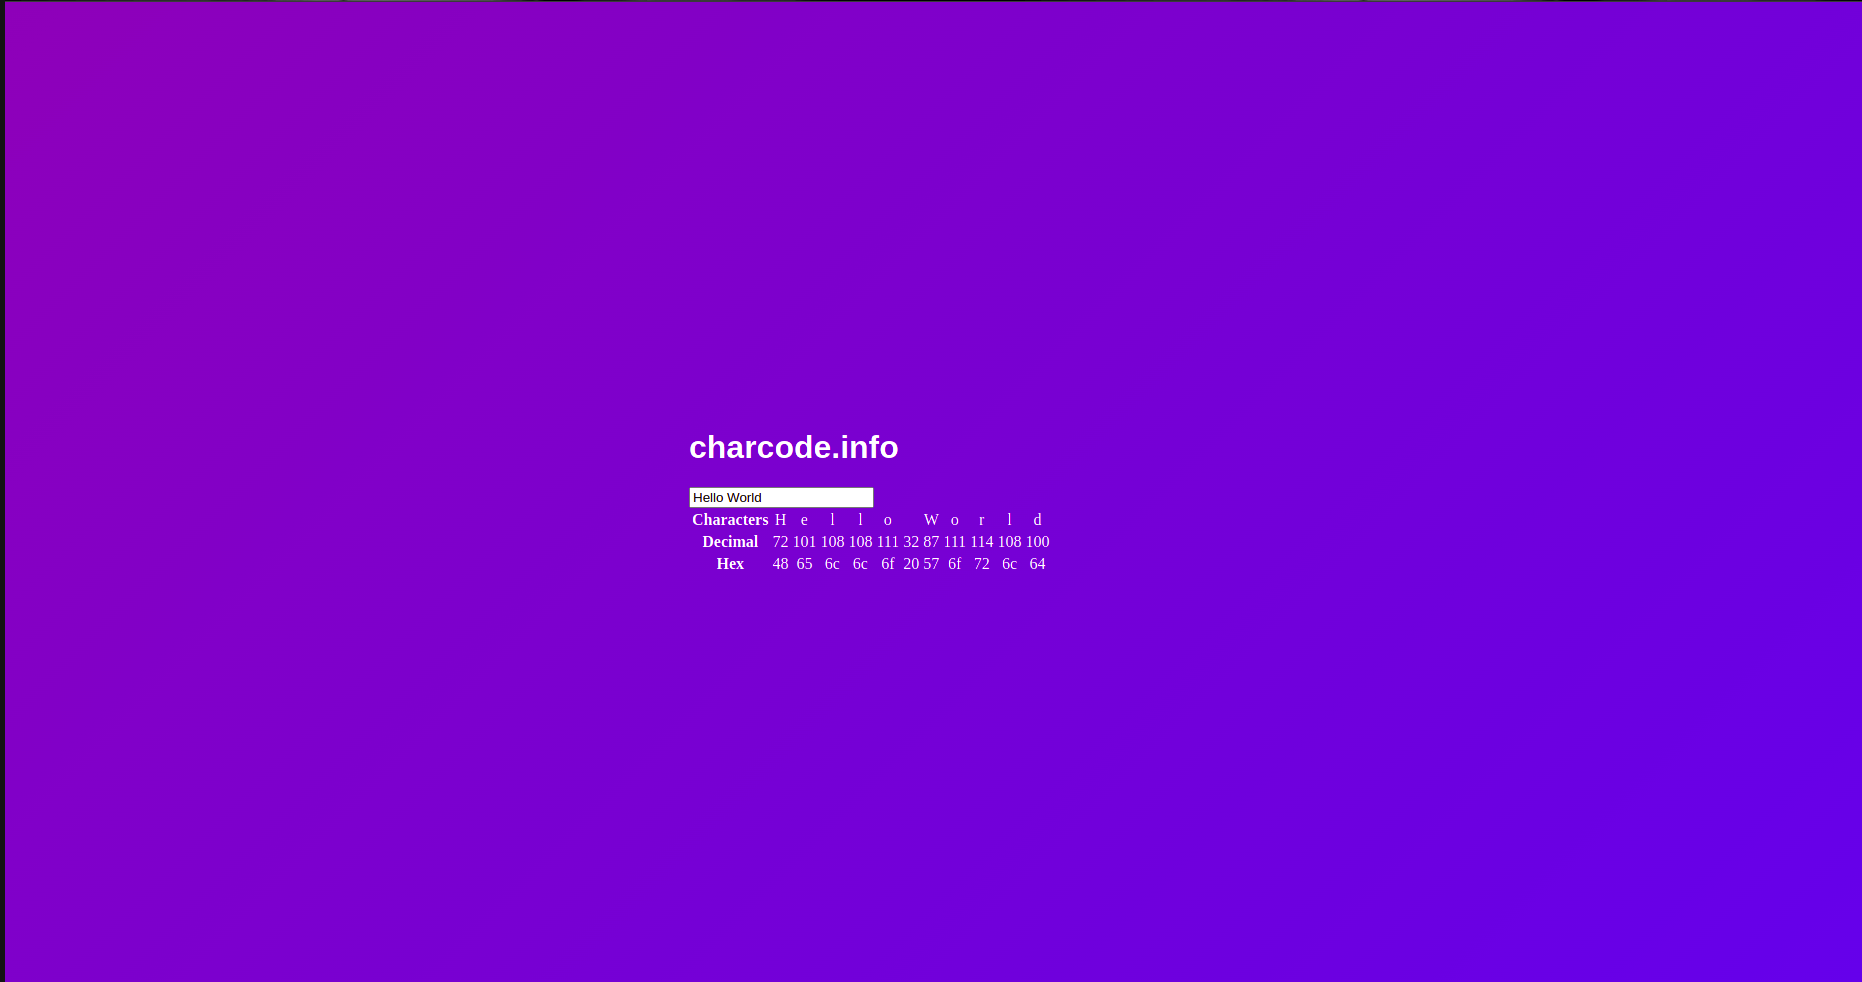 screenhsot of charcode website